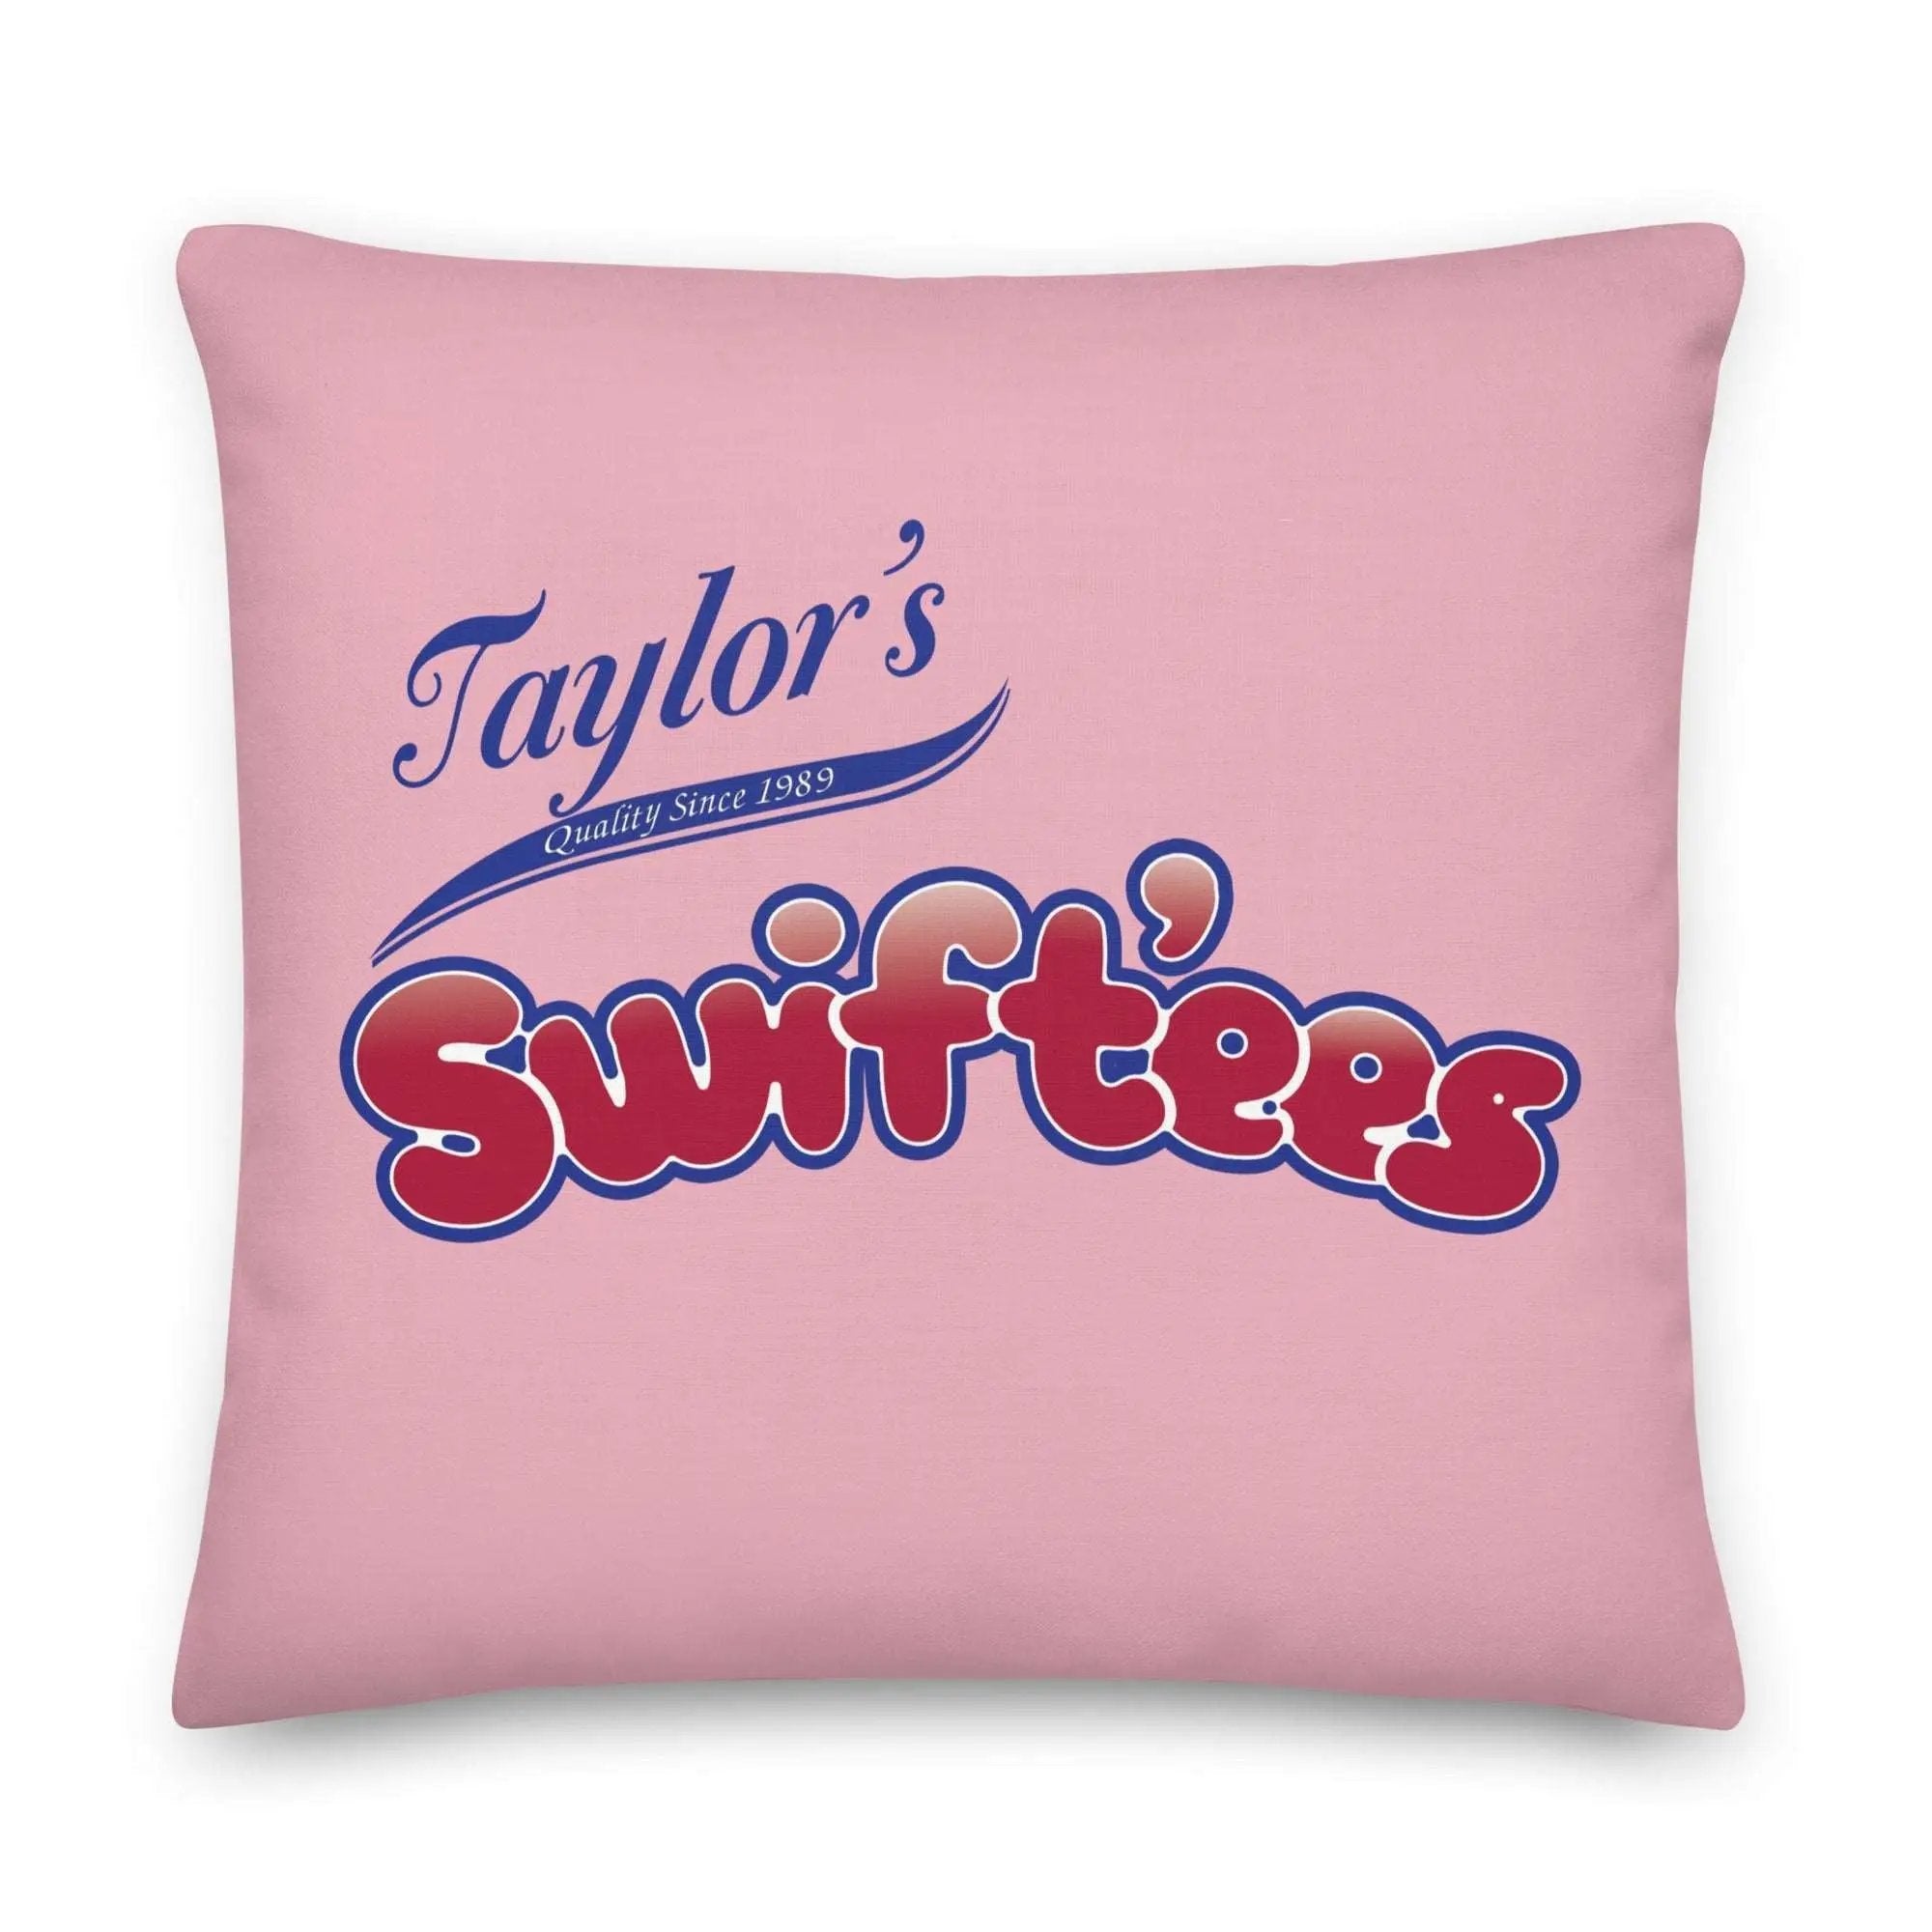 Swift'ees Premium Pillow